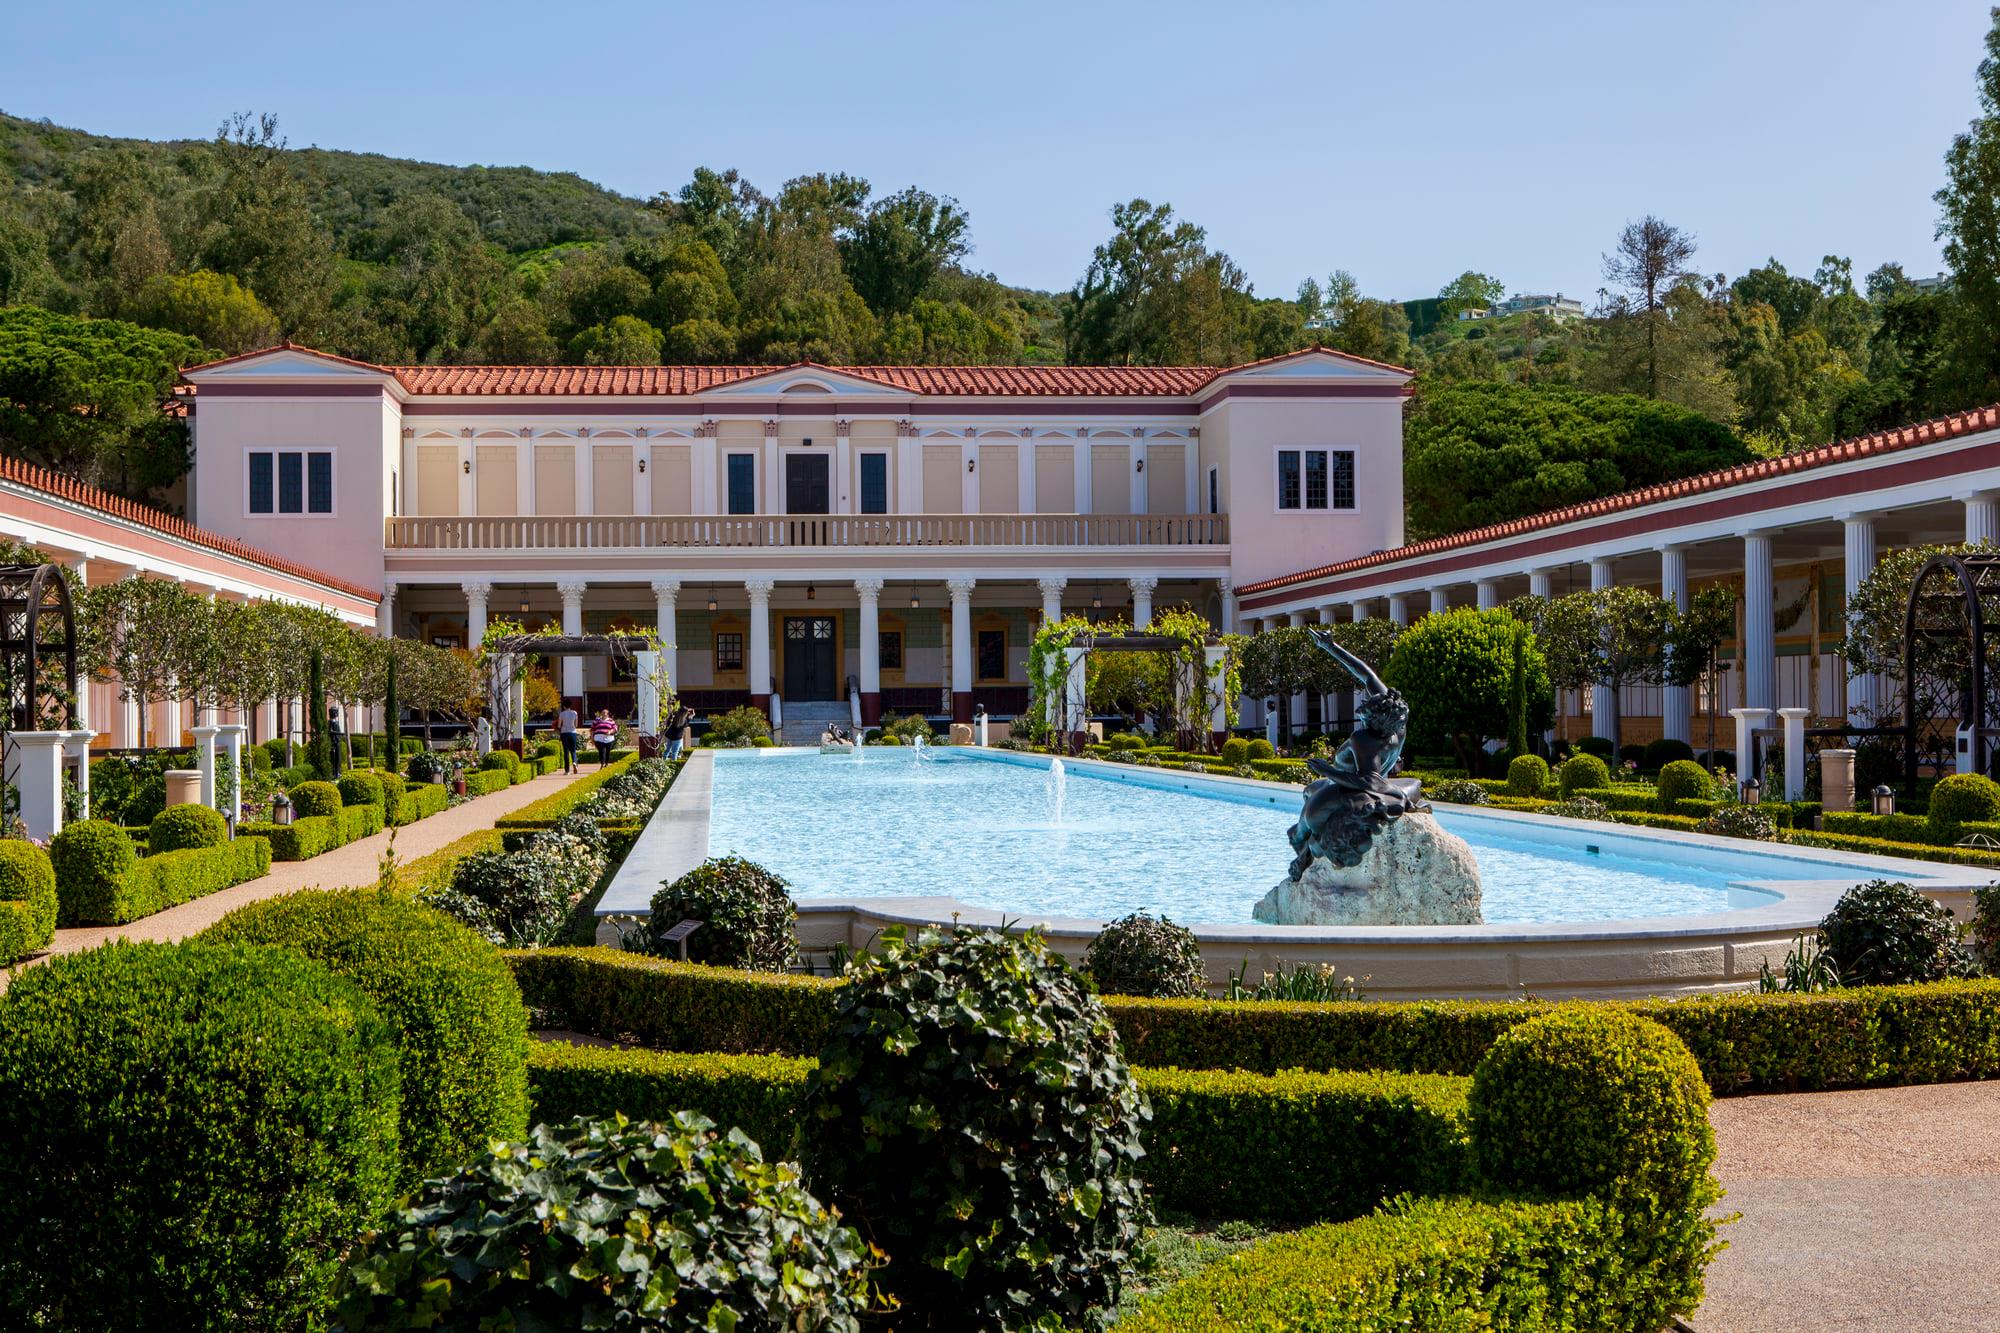 the getty villa, reflecting pool, & gardens